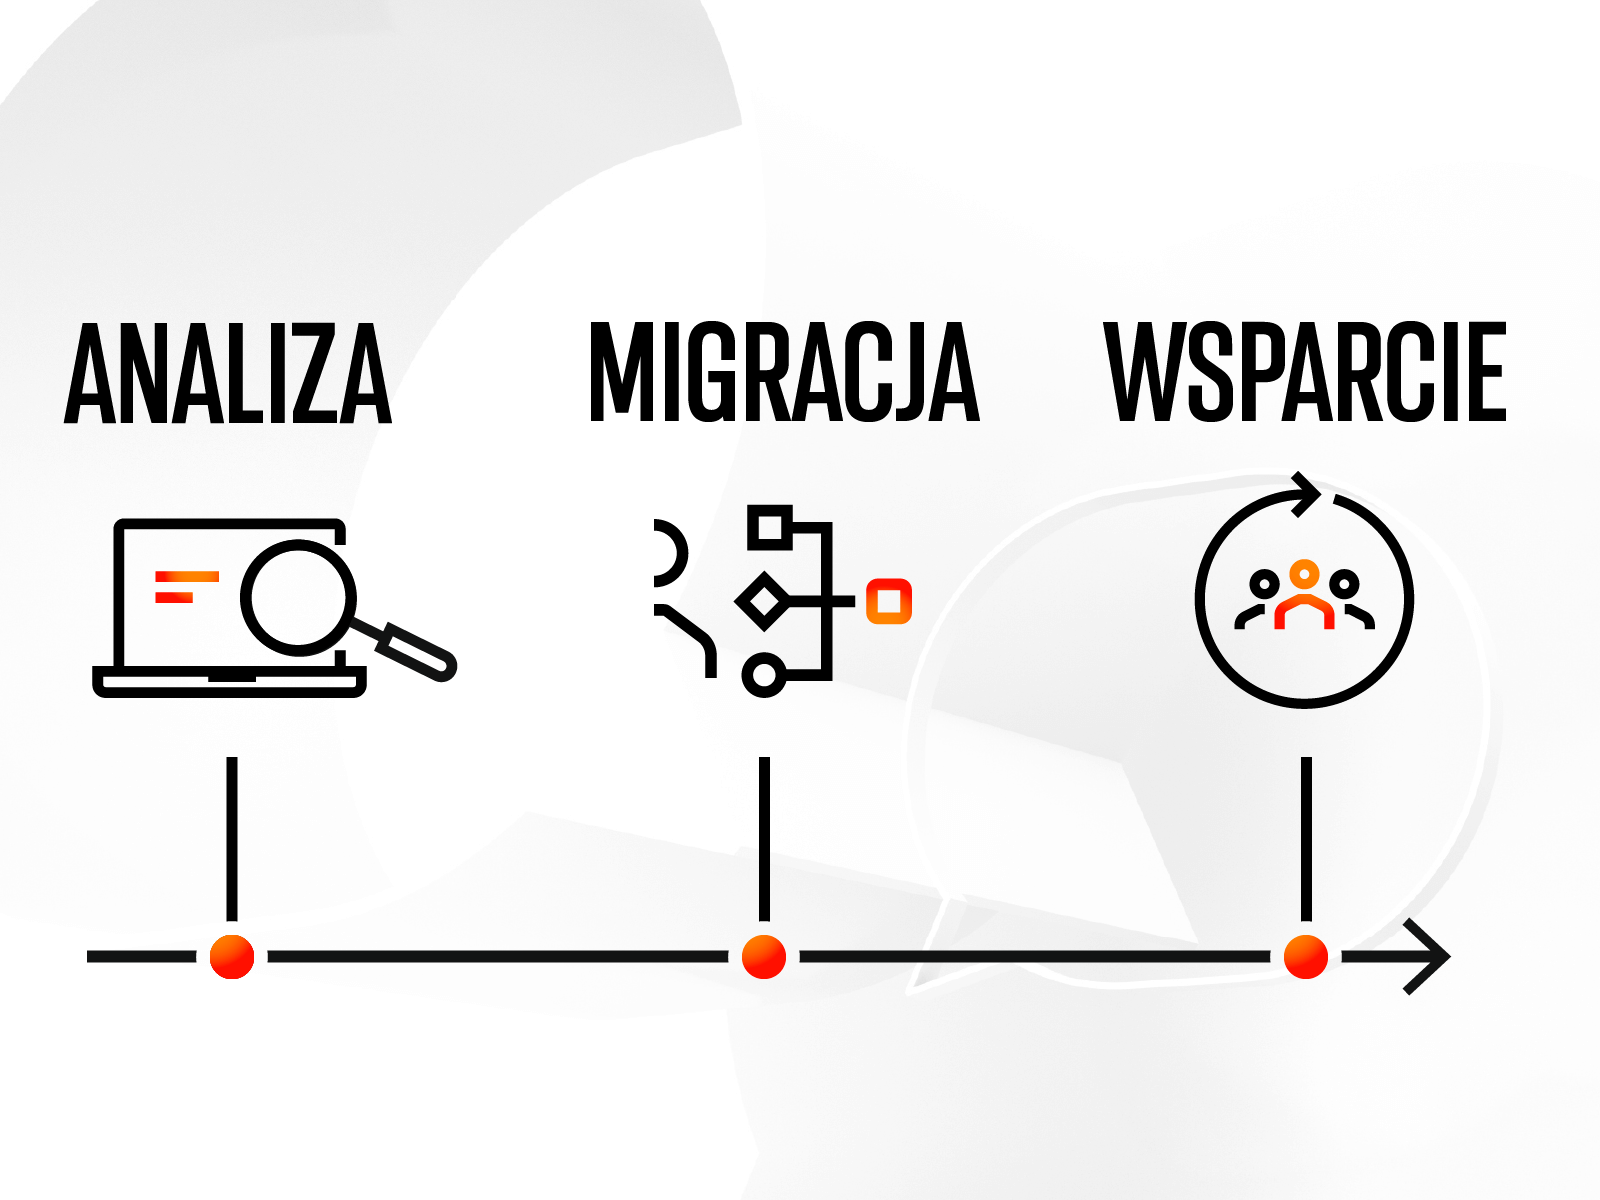 jira_migration_stage